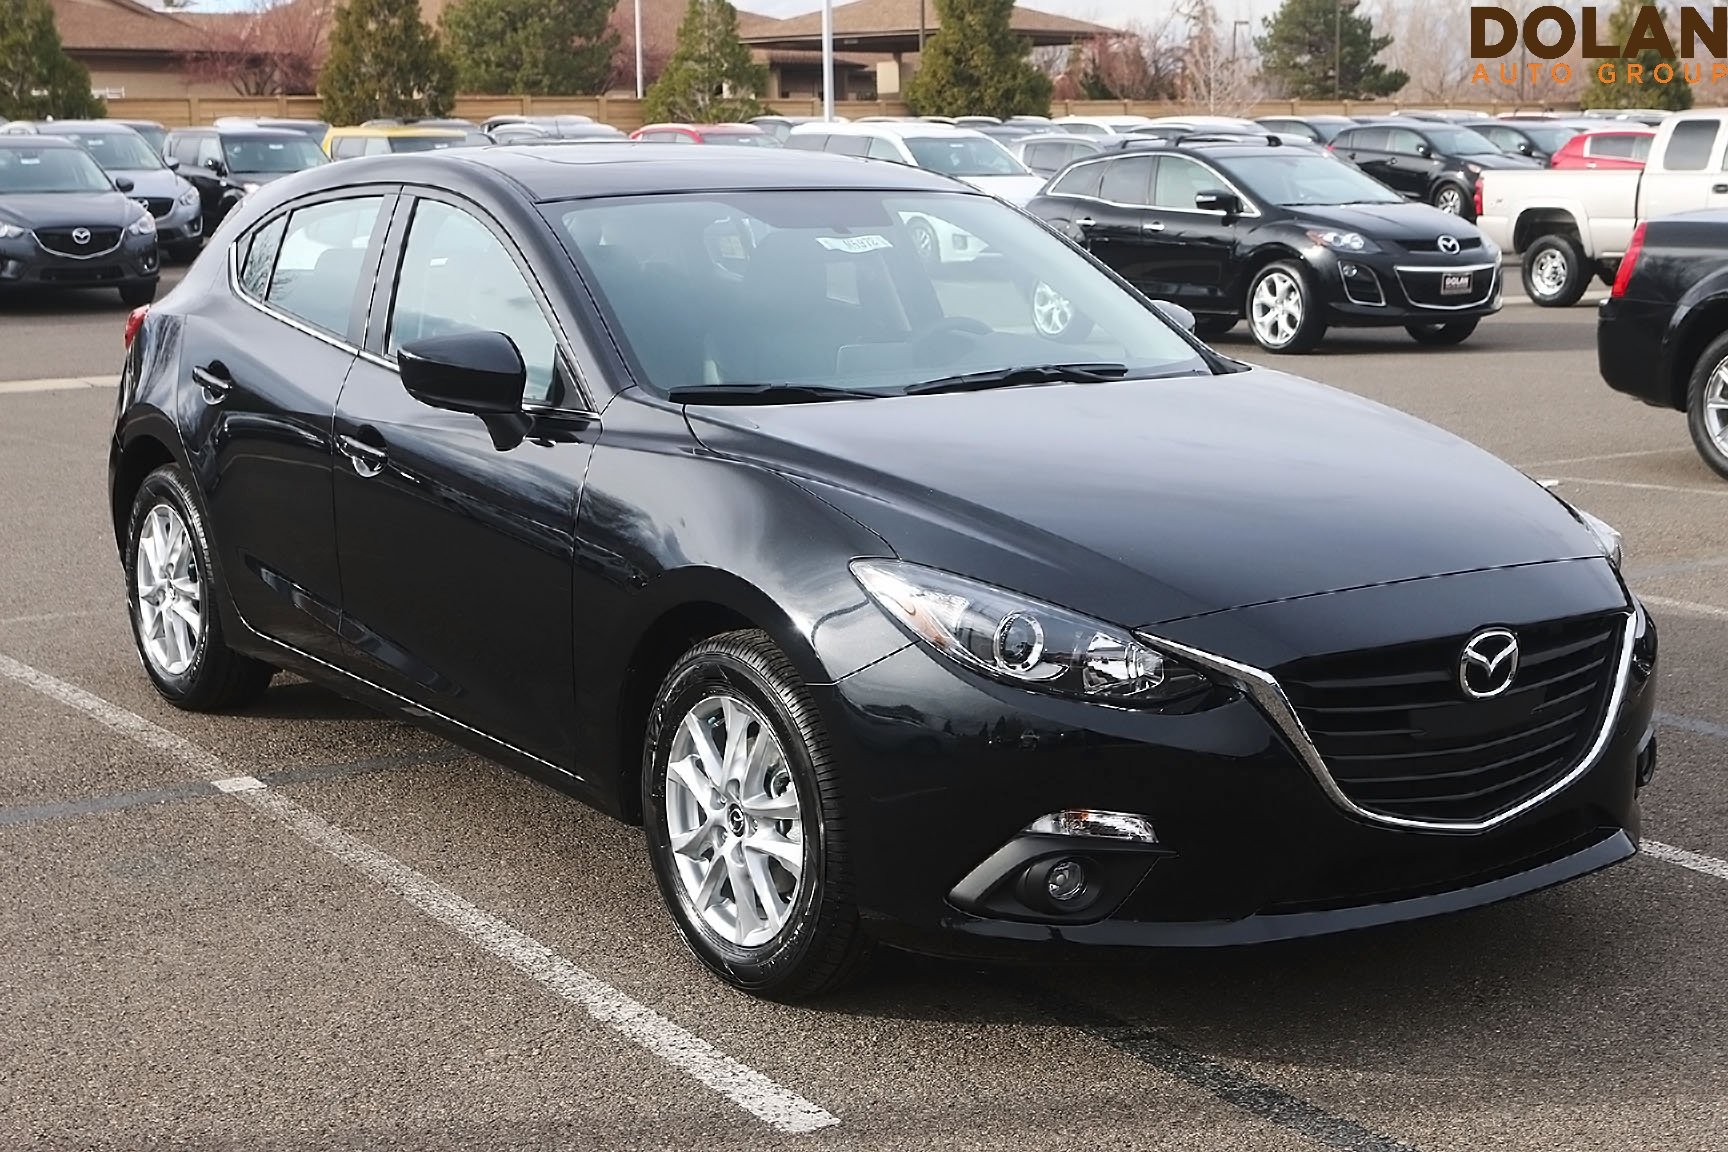 Black mazda. Мазда 3 седан 2015 черная. Mazda 3 черная седан. Мазда 3 2016 черная. Мазда 3 хэтчбек 2015 черный.